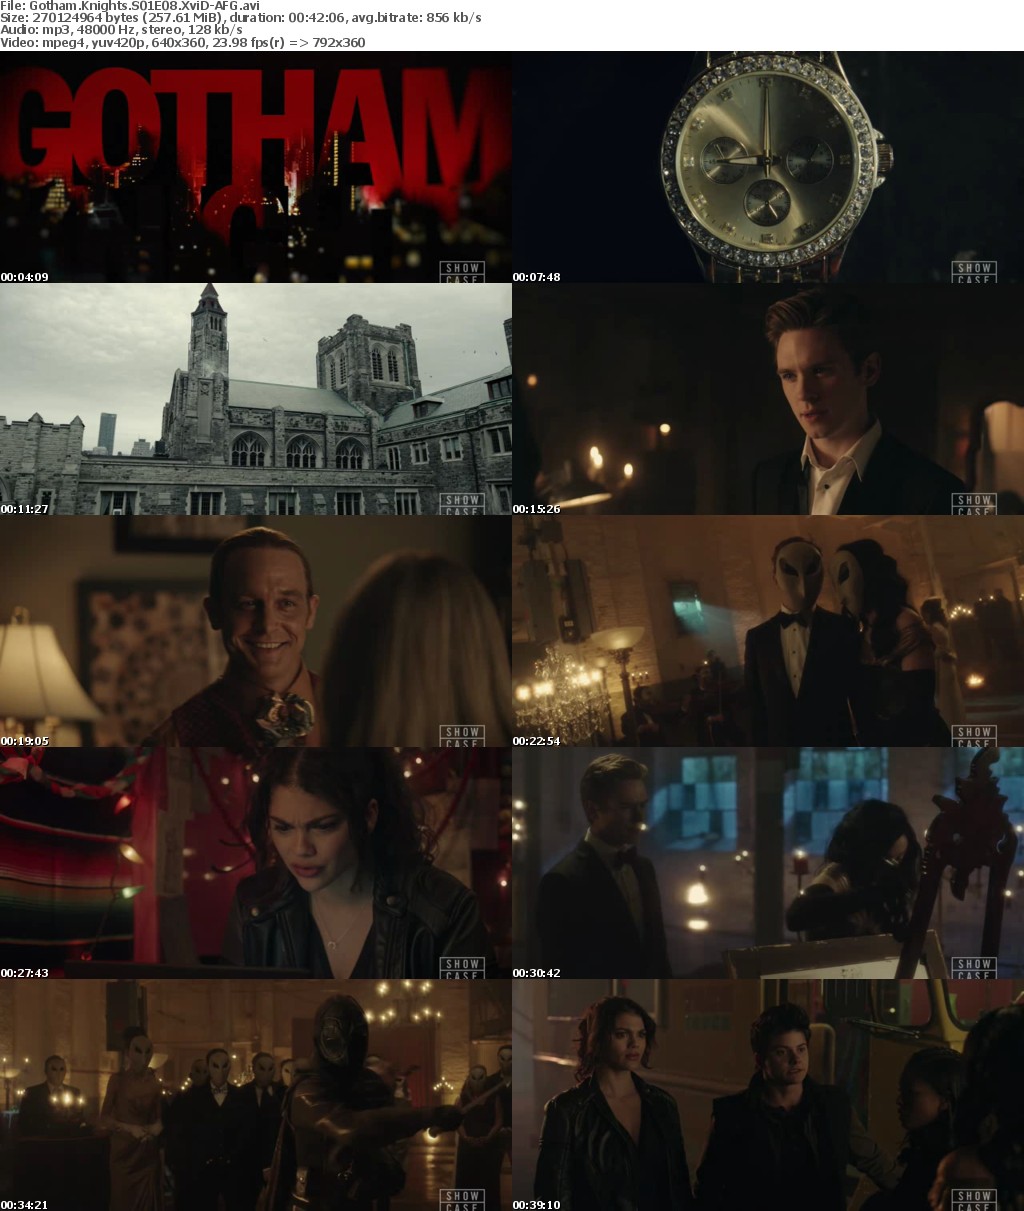 Gotham Knights S01E08 XviD-AFG